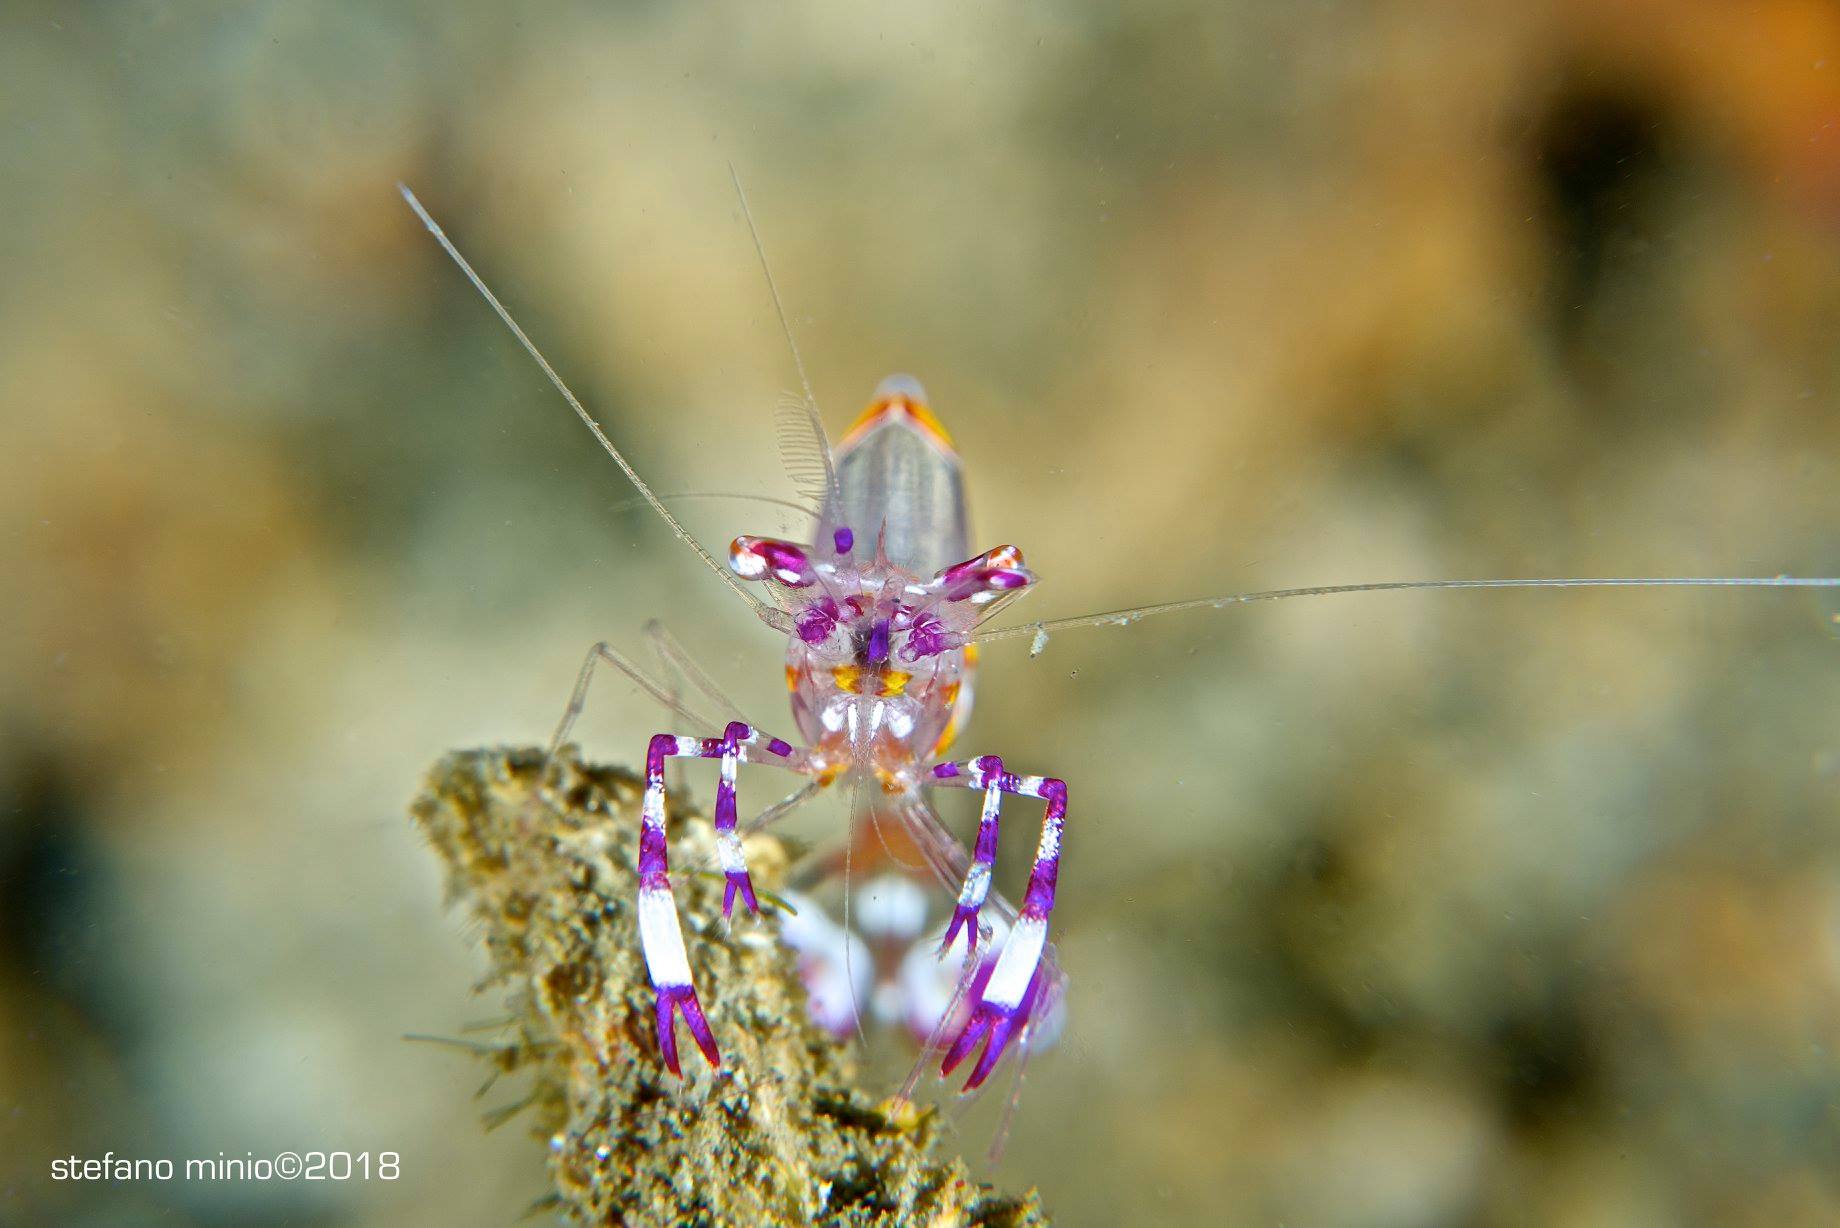 Halmahera's cleaner shrimp